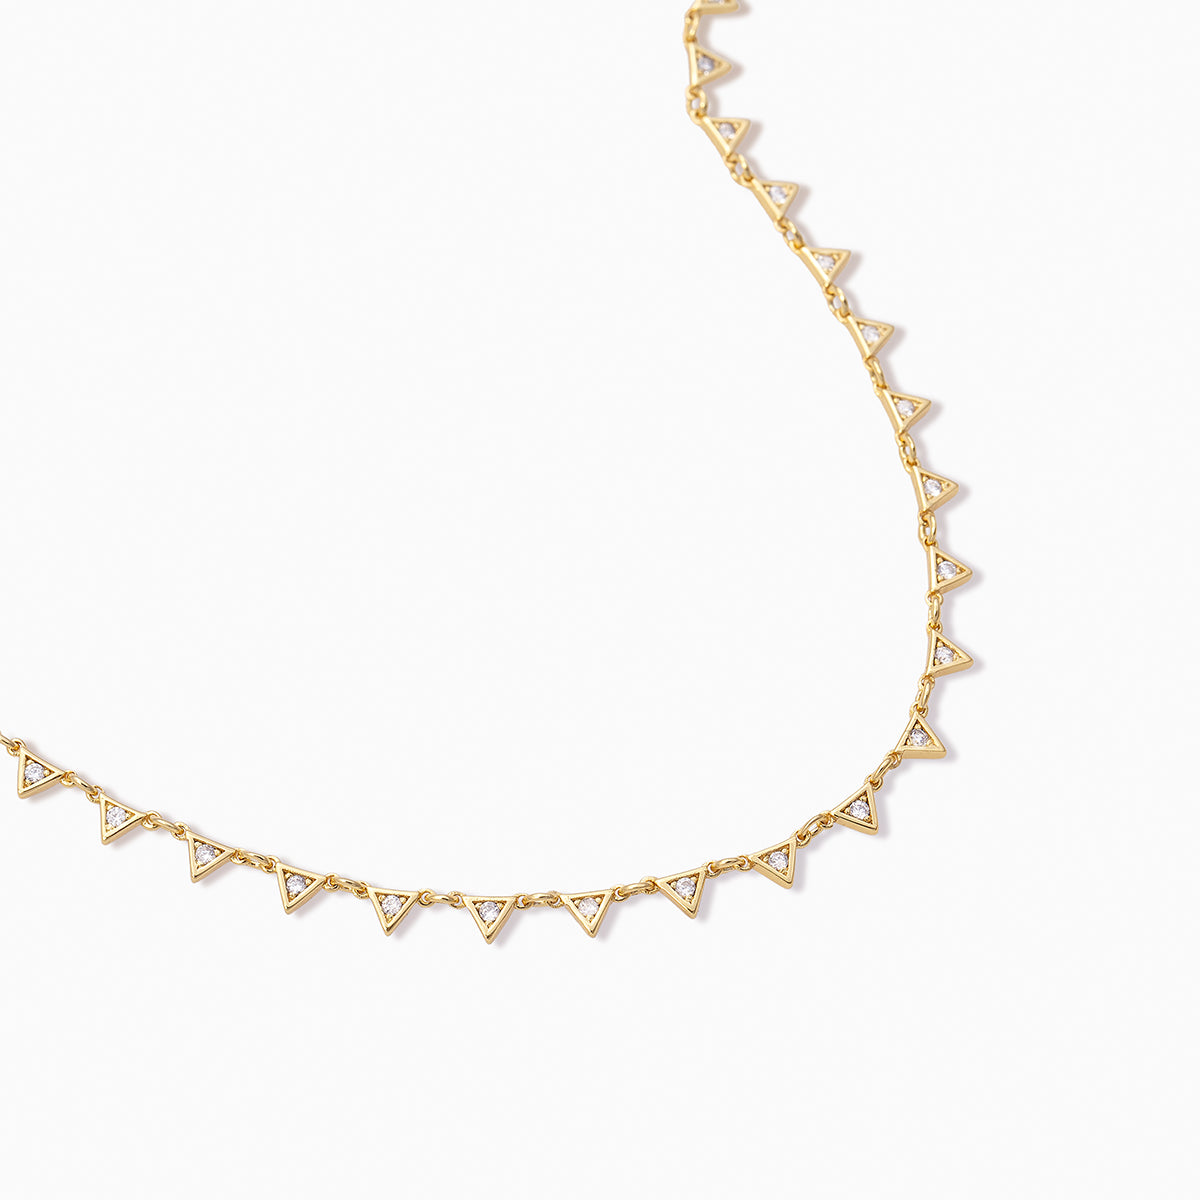 East Village Necklace | Gold | Product Detail Image | Uncommon James